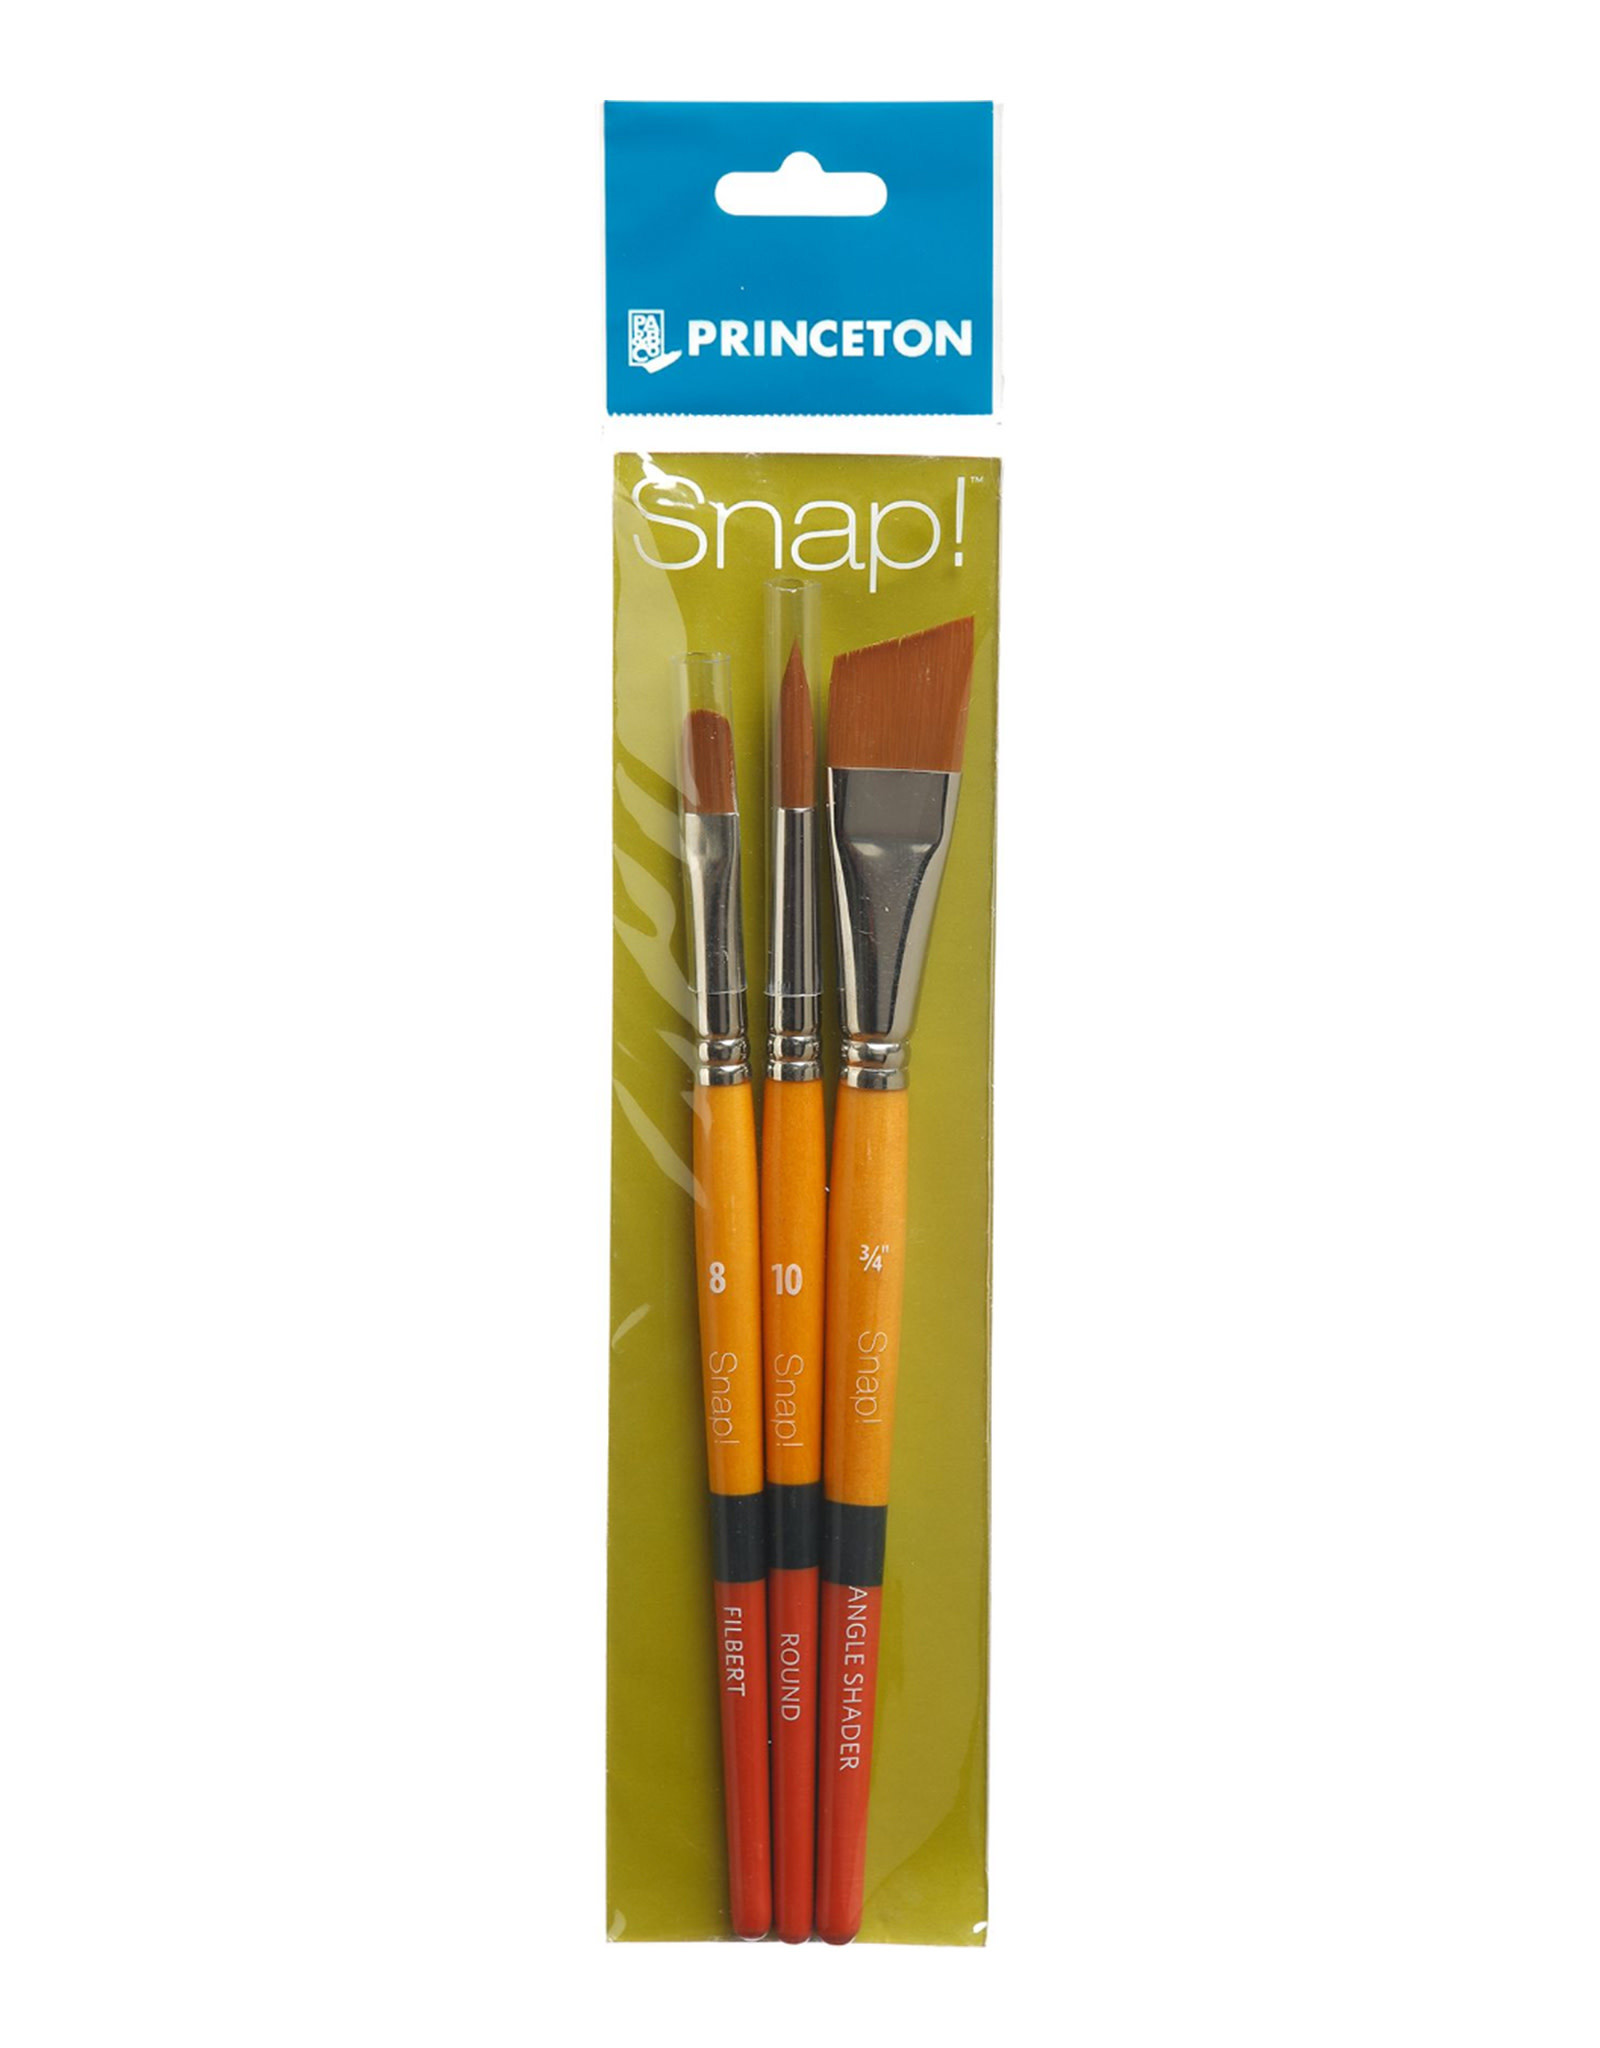 Princeton Princeton Snap! 3-Piece Set with 1 Filbert Brush, 1 Round Brush and 1 Angle Shader Brush